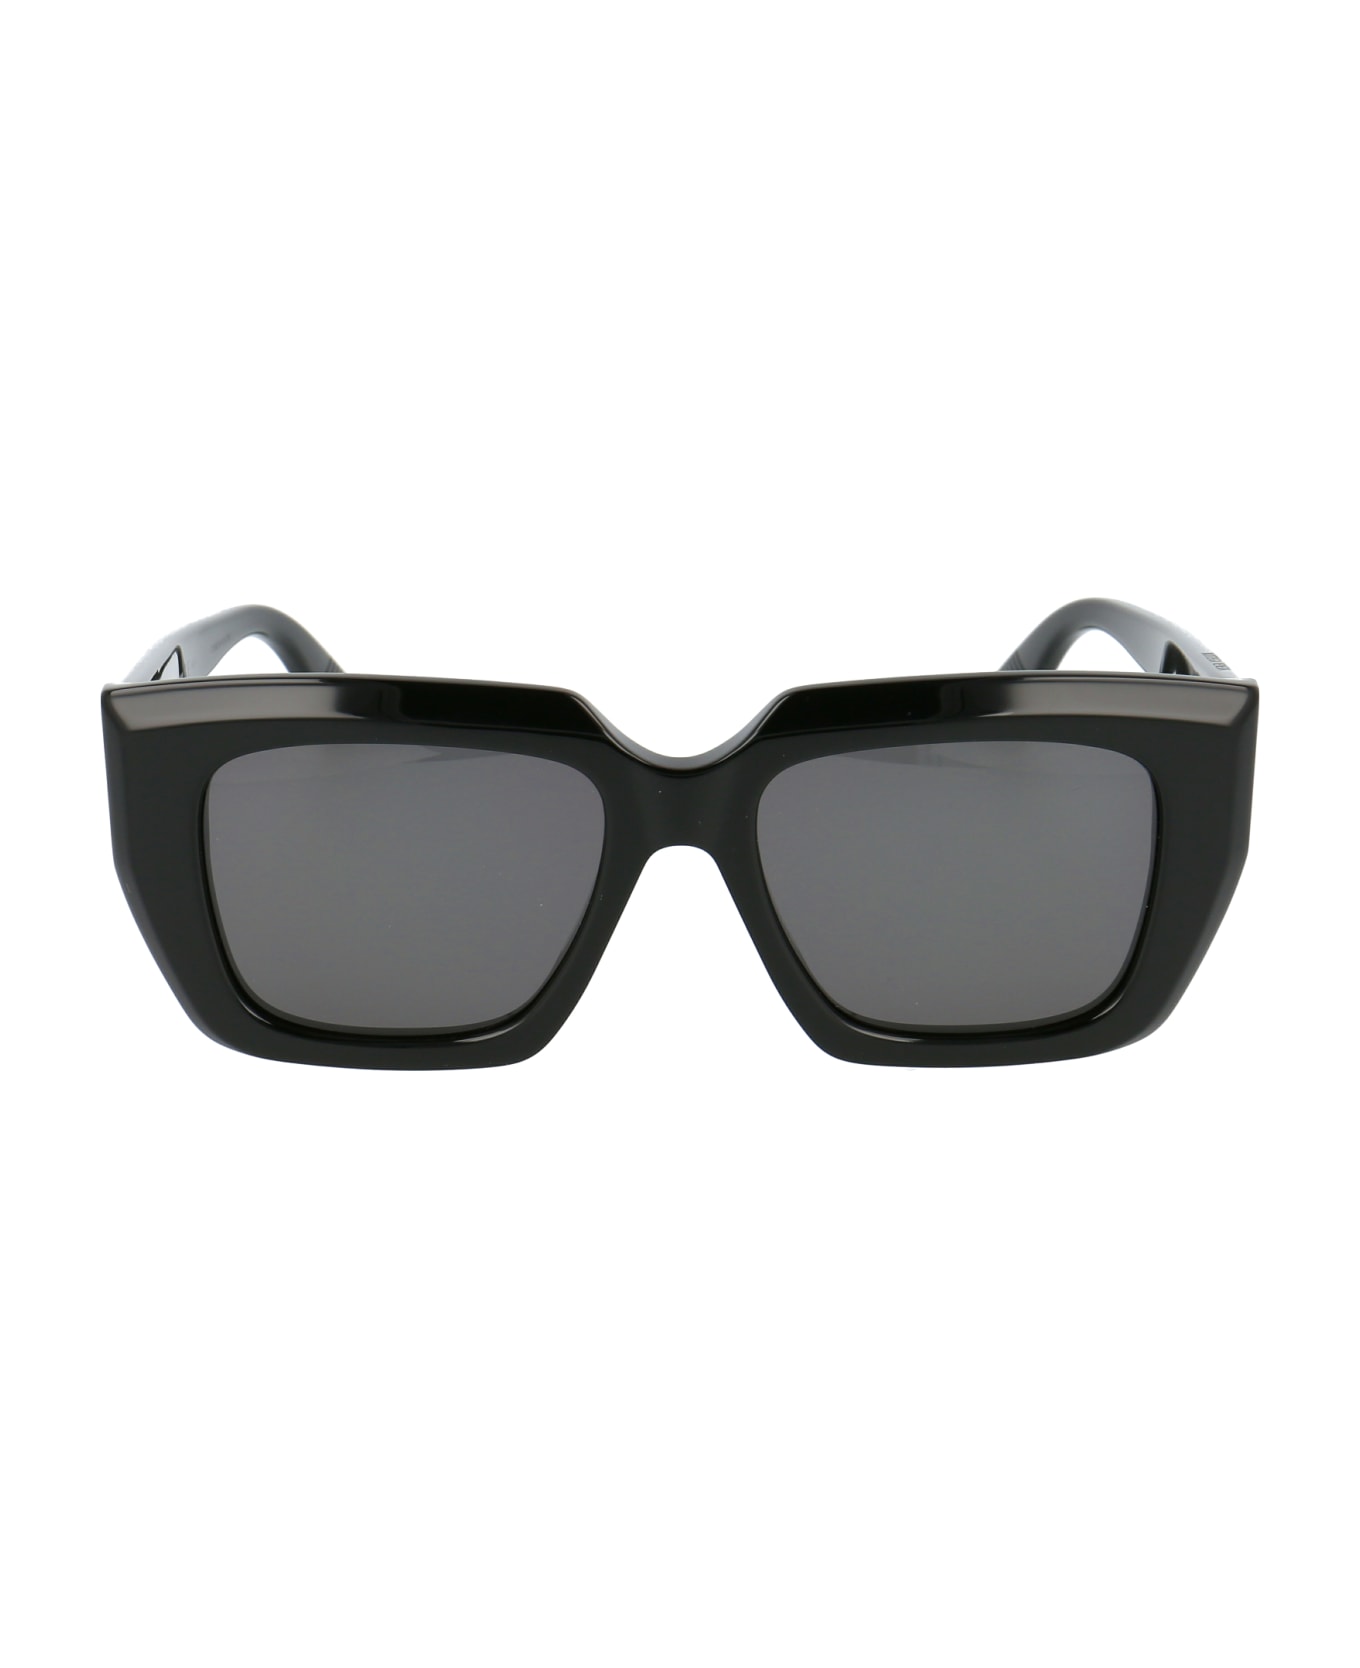 Bottega Veneta Eyewear Bv1030s Sunglasses - 001 BLACK BLACK GREY